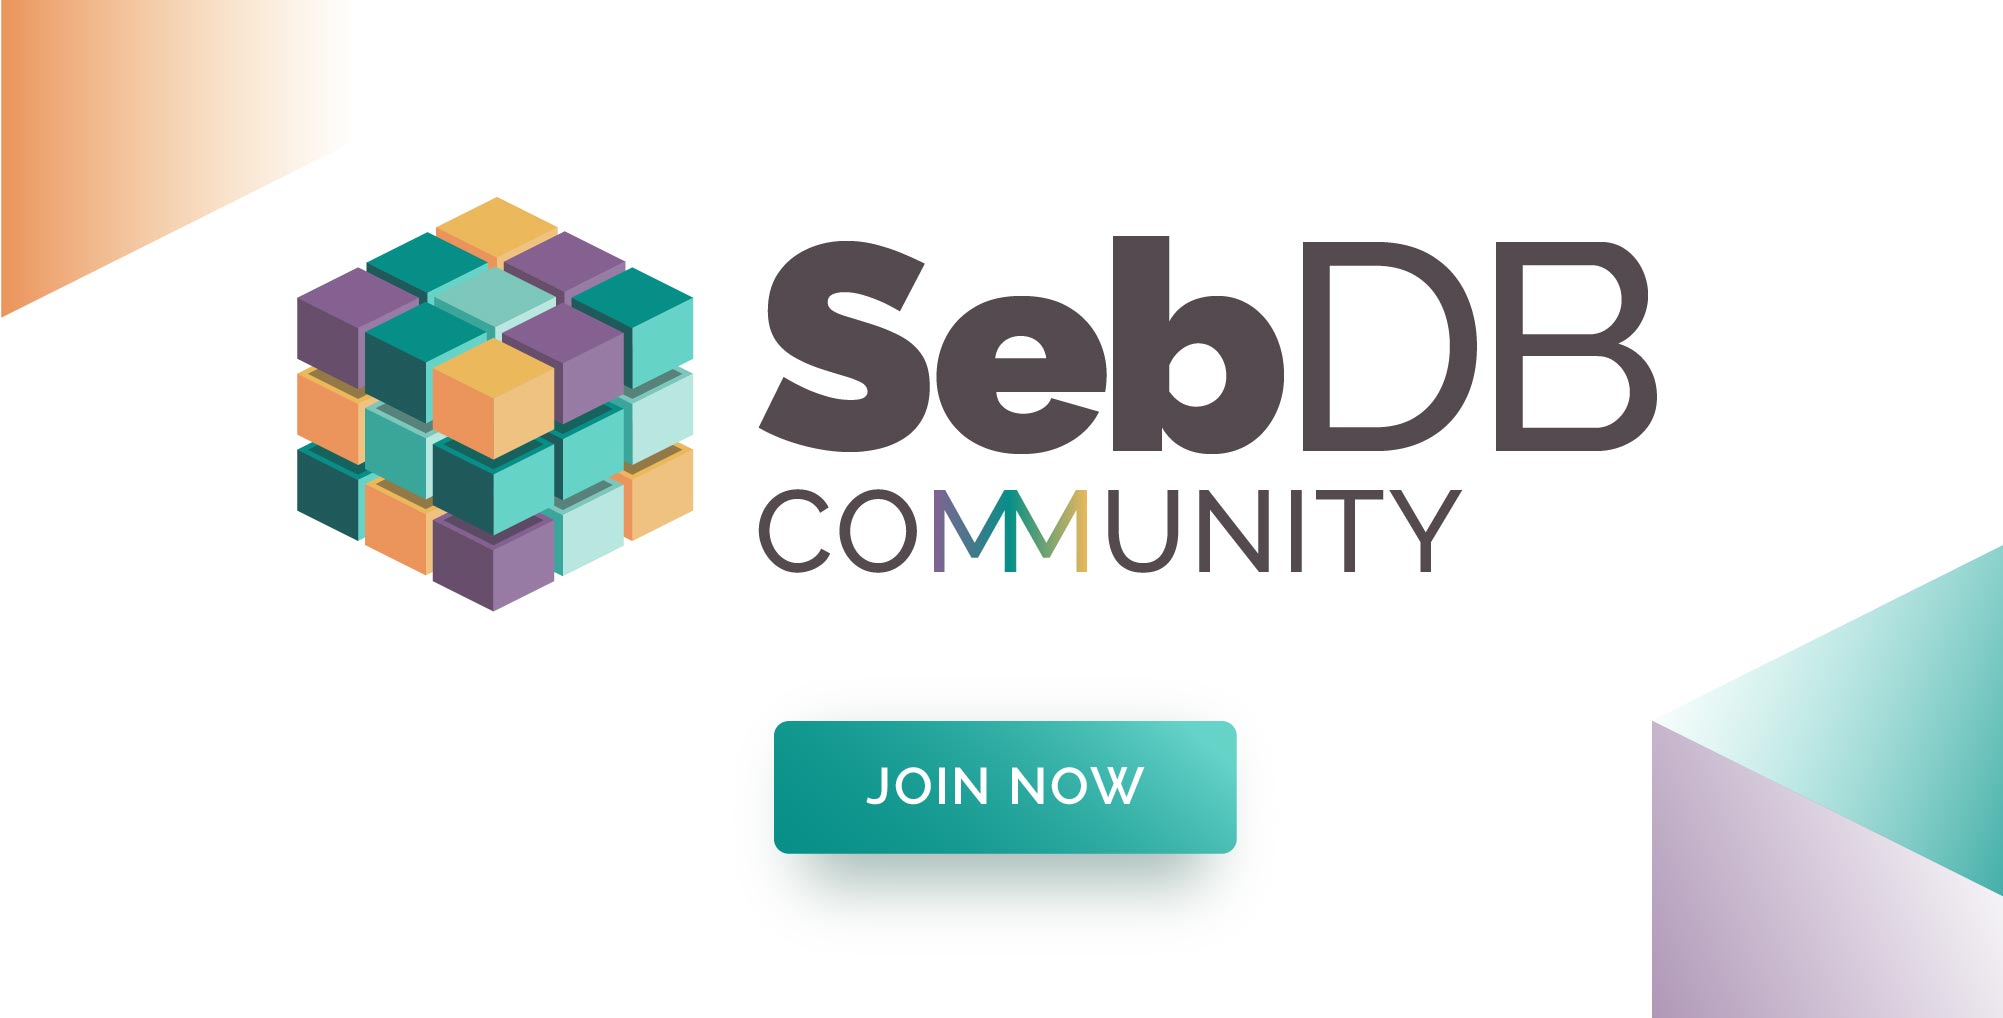 SebDB community join now